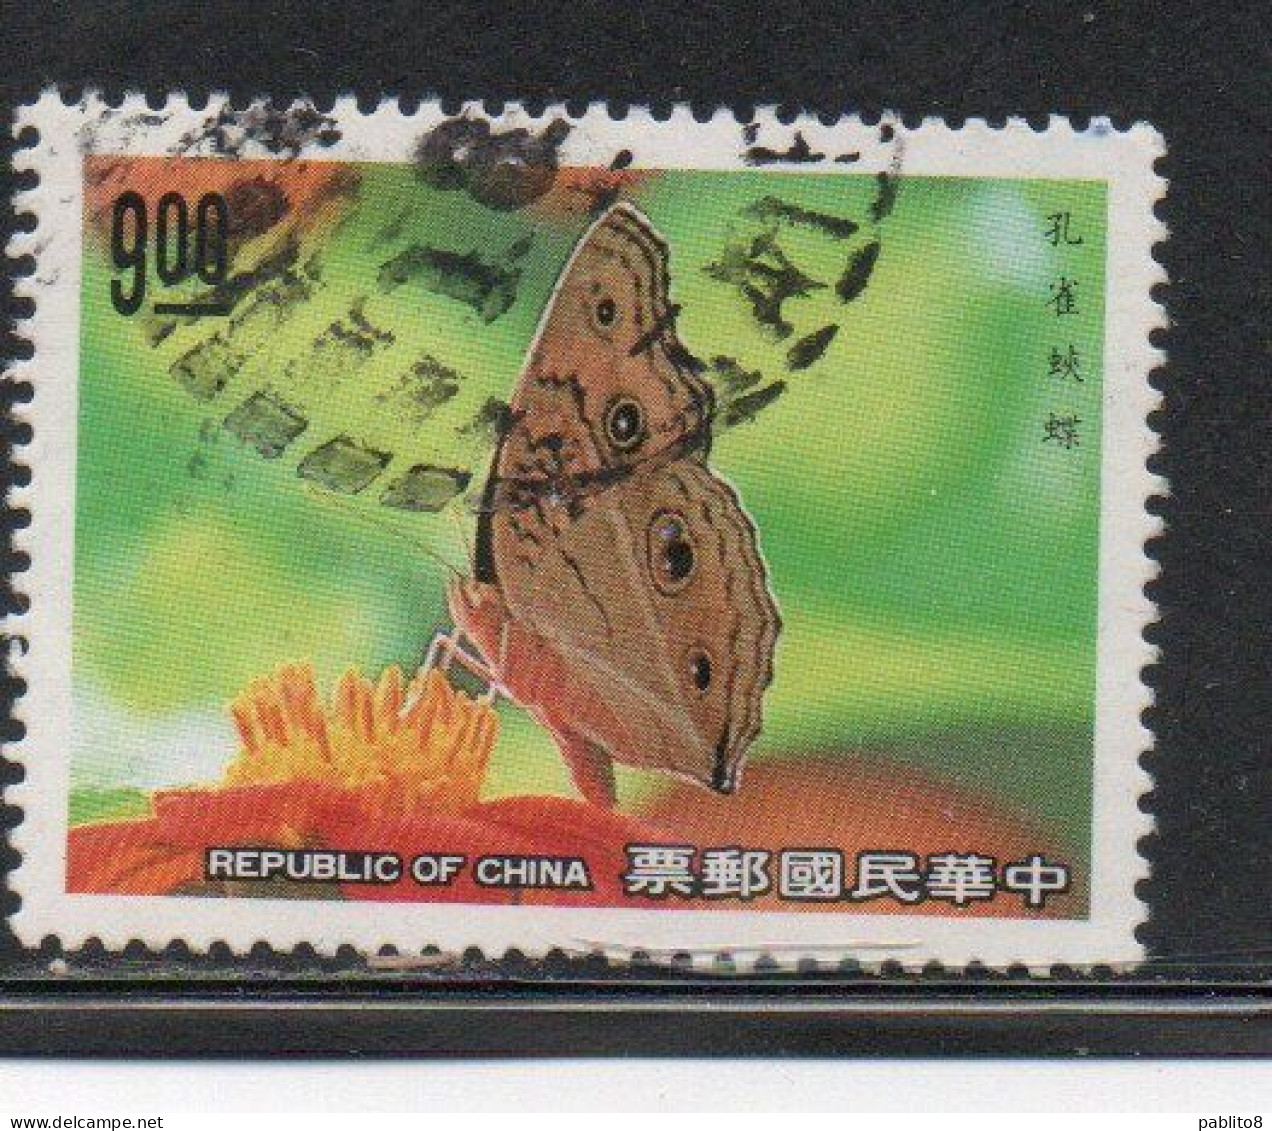 CHINA REPUBLIC CINA TAIWAN FORMOSA 1990 BUTTERFLIES PRECIS ALMANA 9$ USED USATO OBLITERE' - Usati